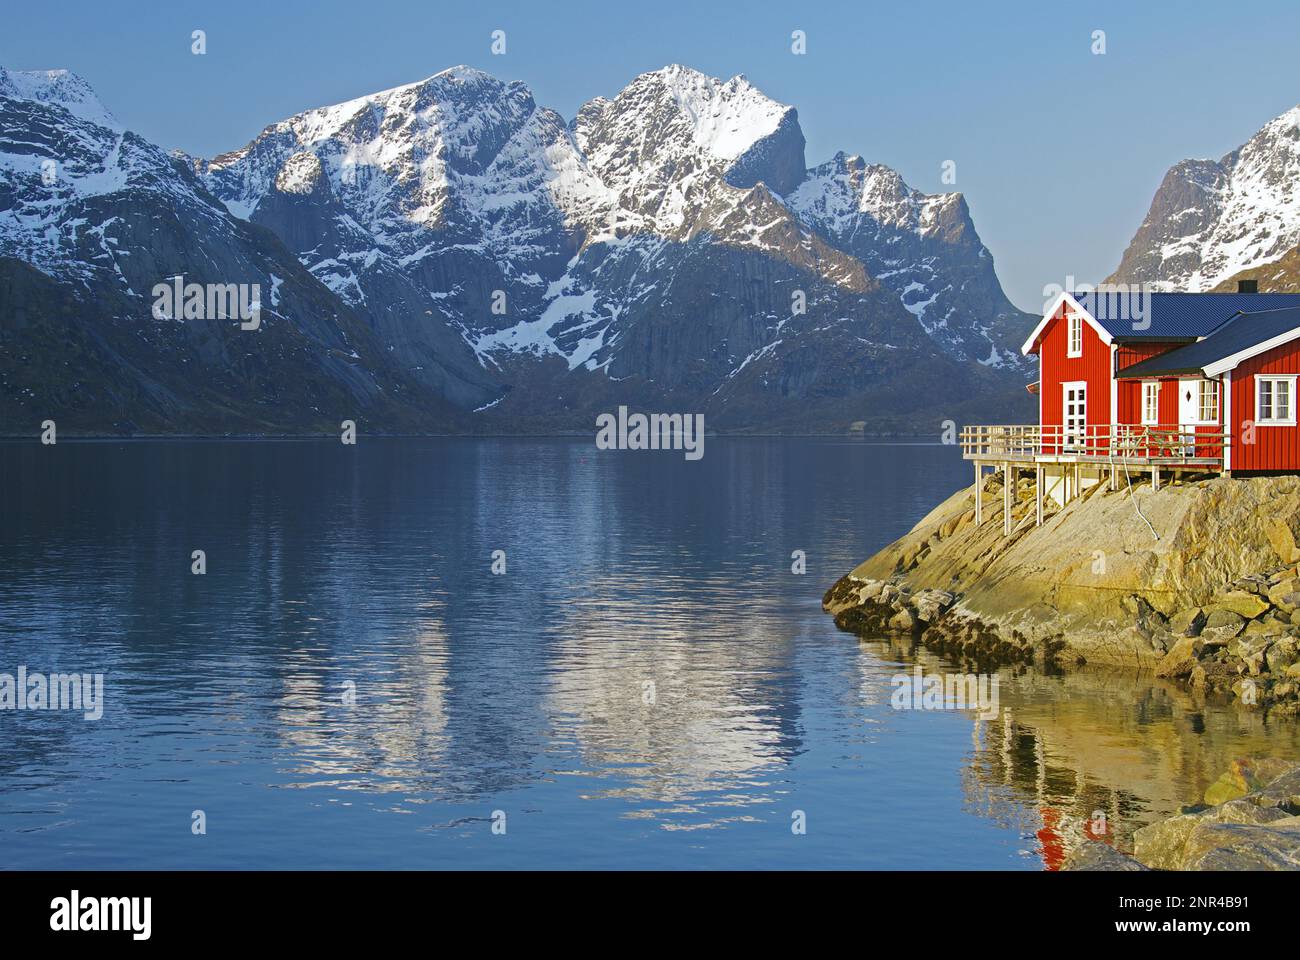 Rorbuer e alte montagne riflesse in un fiordo, vacanze, turismo, idil invernale, Hamnöy, Reinefjorden, Lofoten, Norvegia, Europa Foto Stock